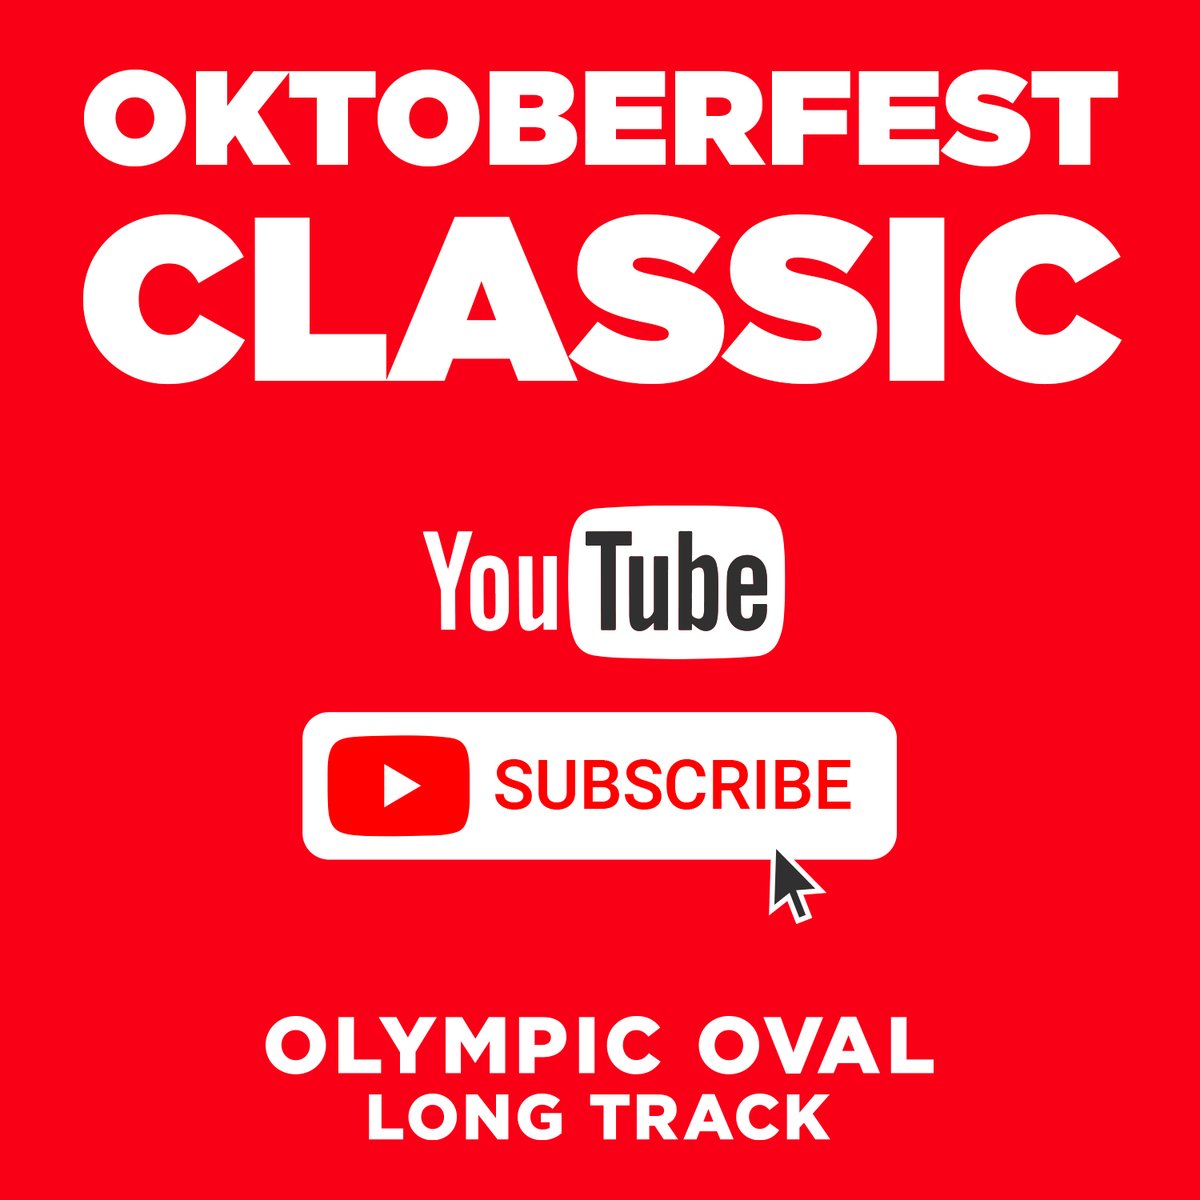 Races are now LIVE - OKTOBERFEST CLASSIC. youtube.com/watch?v=ZGsAWe…